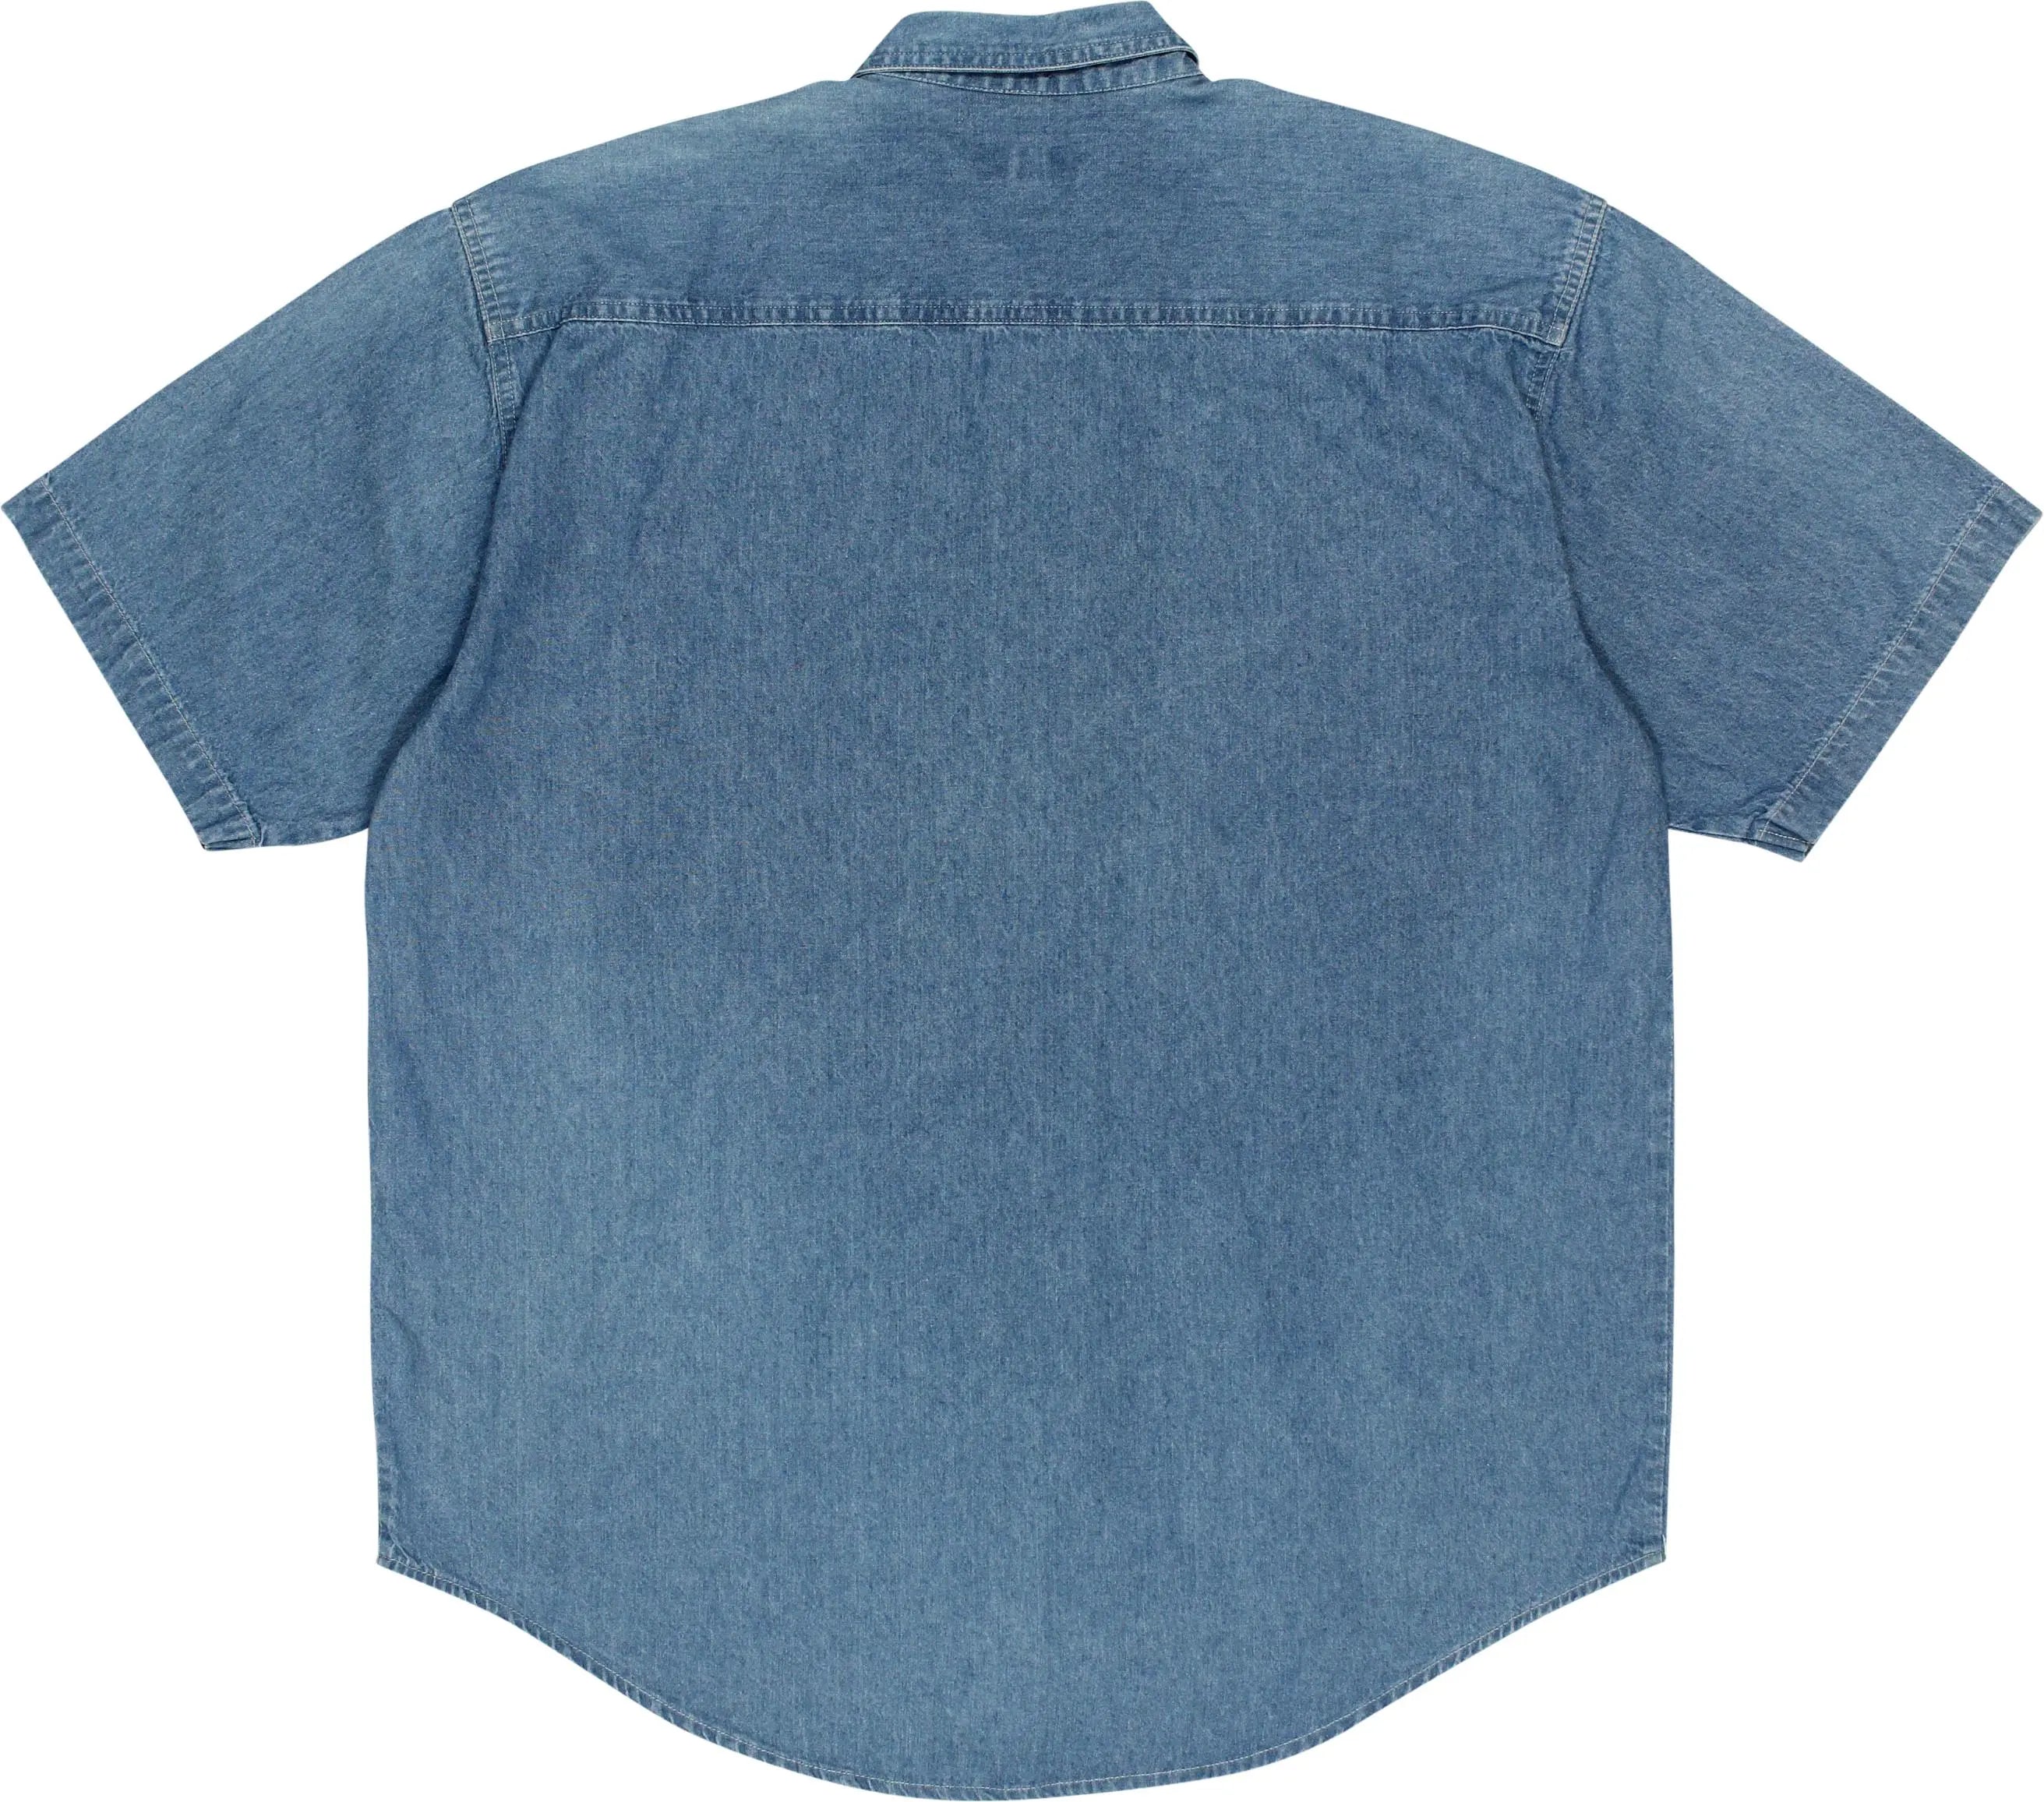 Special Basic Sport - Denim Short Sleeve- ThriftTale.com - Vintage and second handclothing